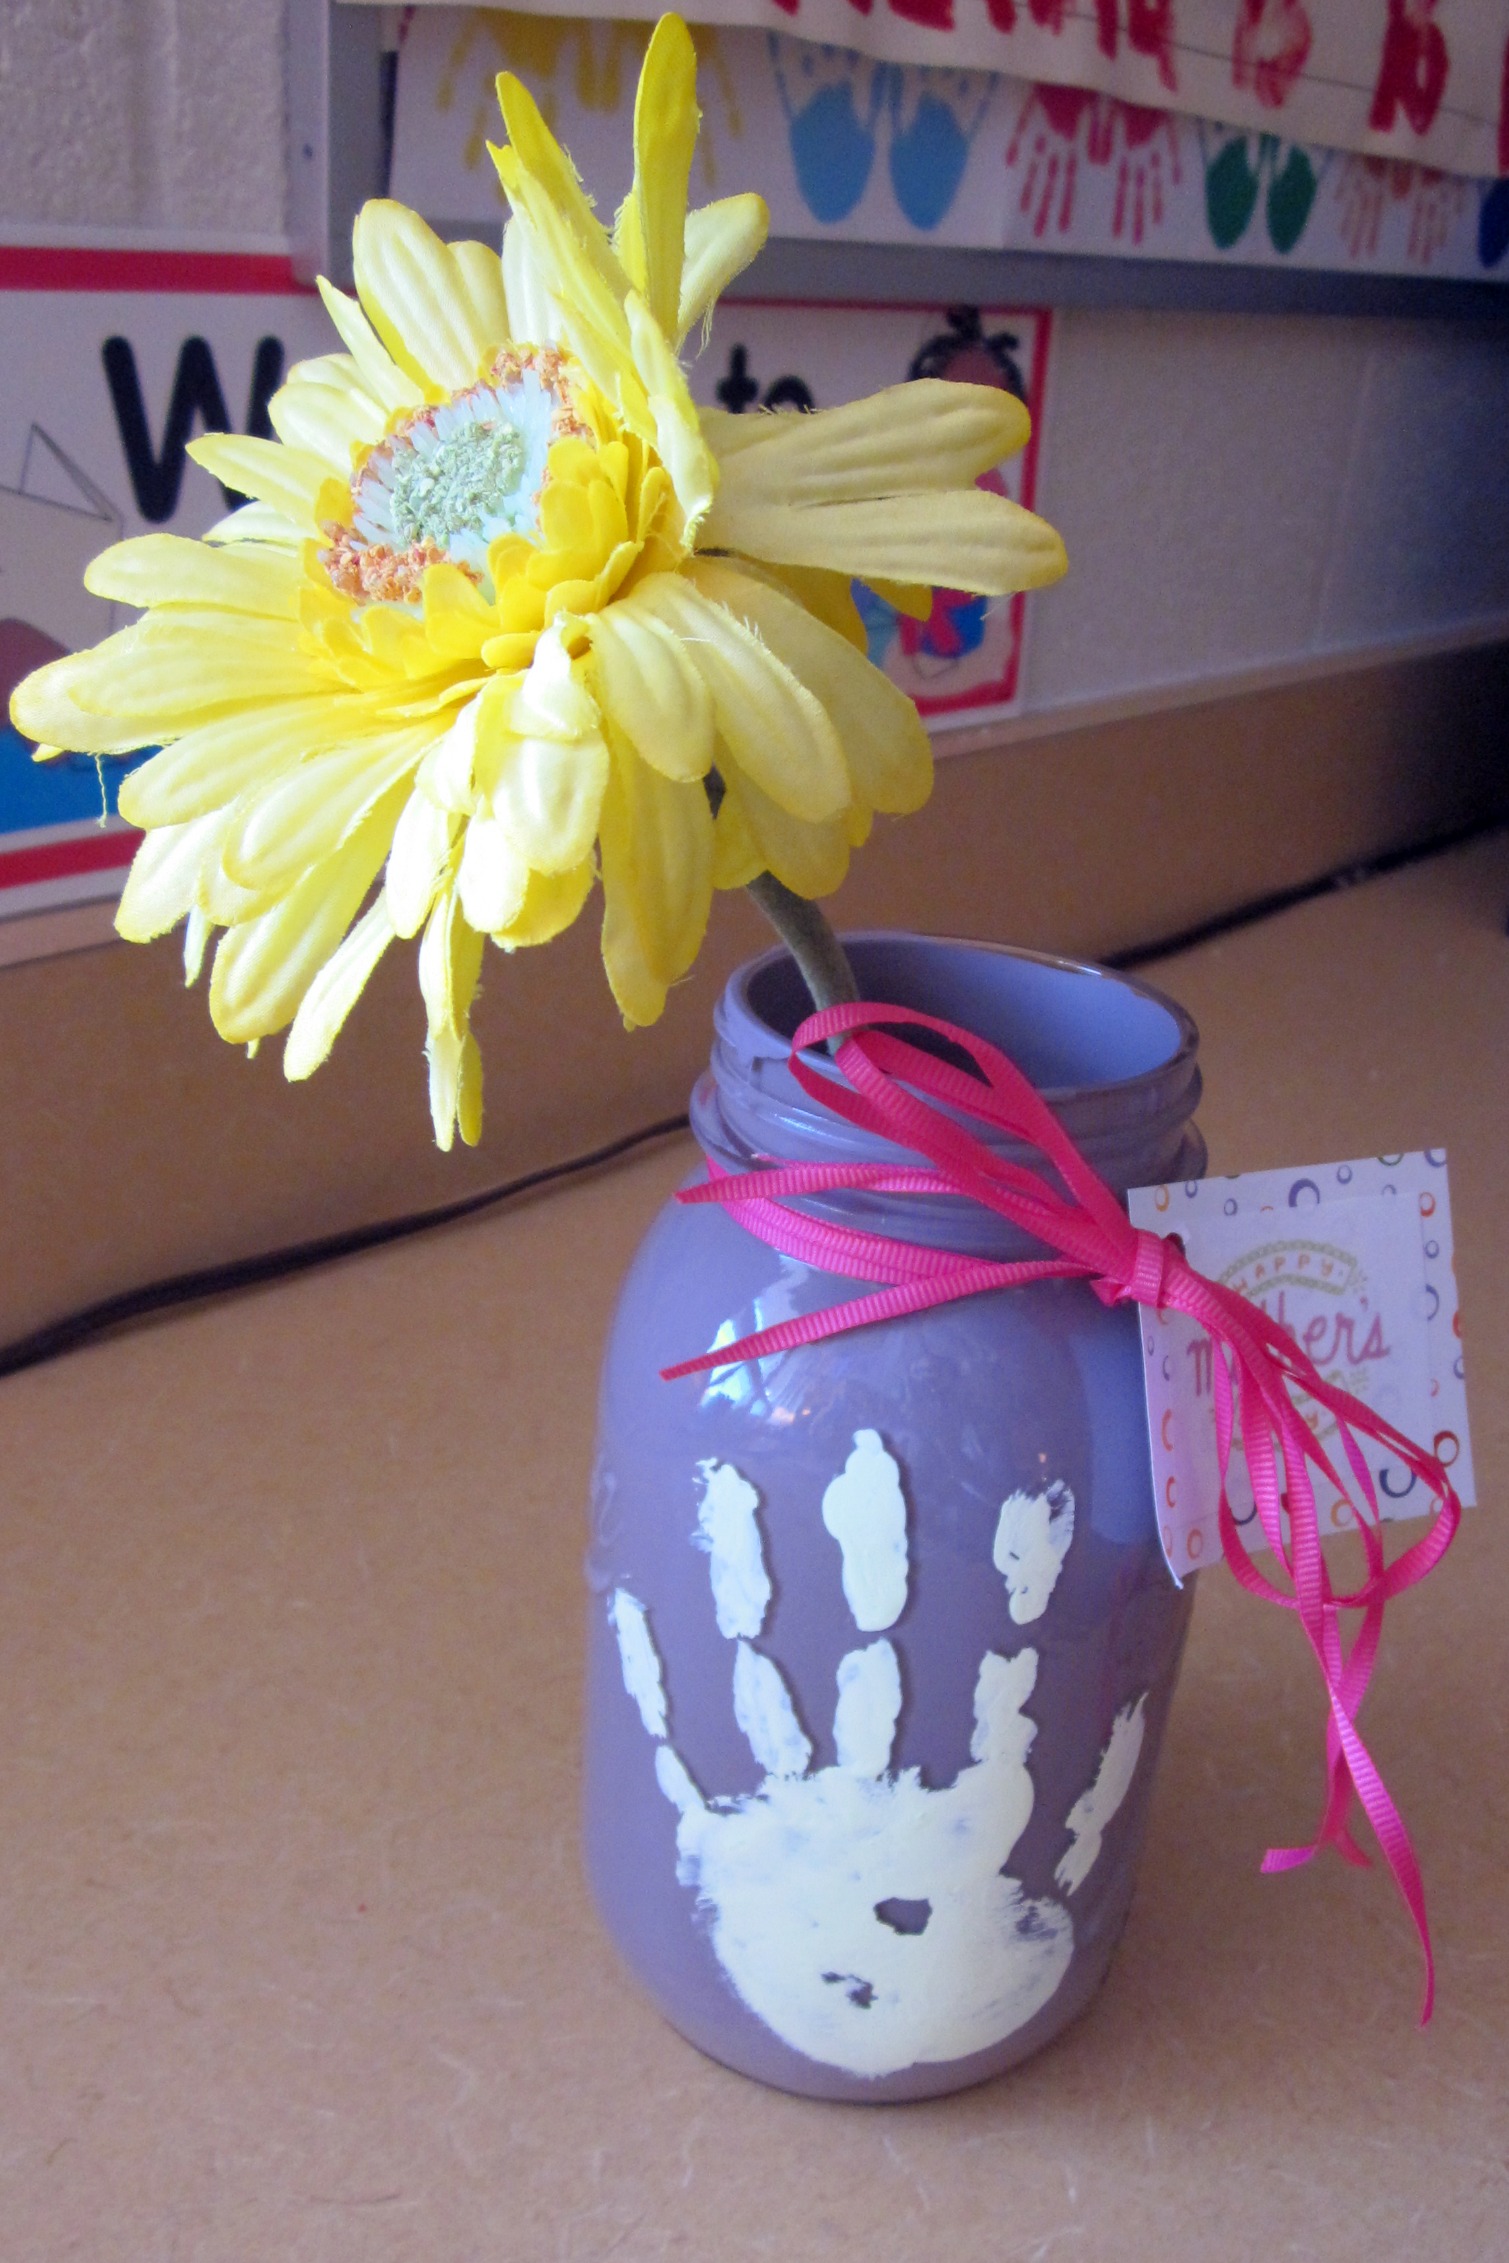 Mothers Day Ideas for kids - mason jar vase